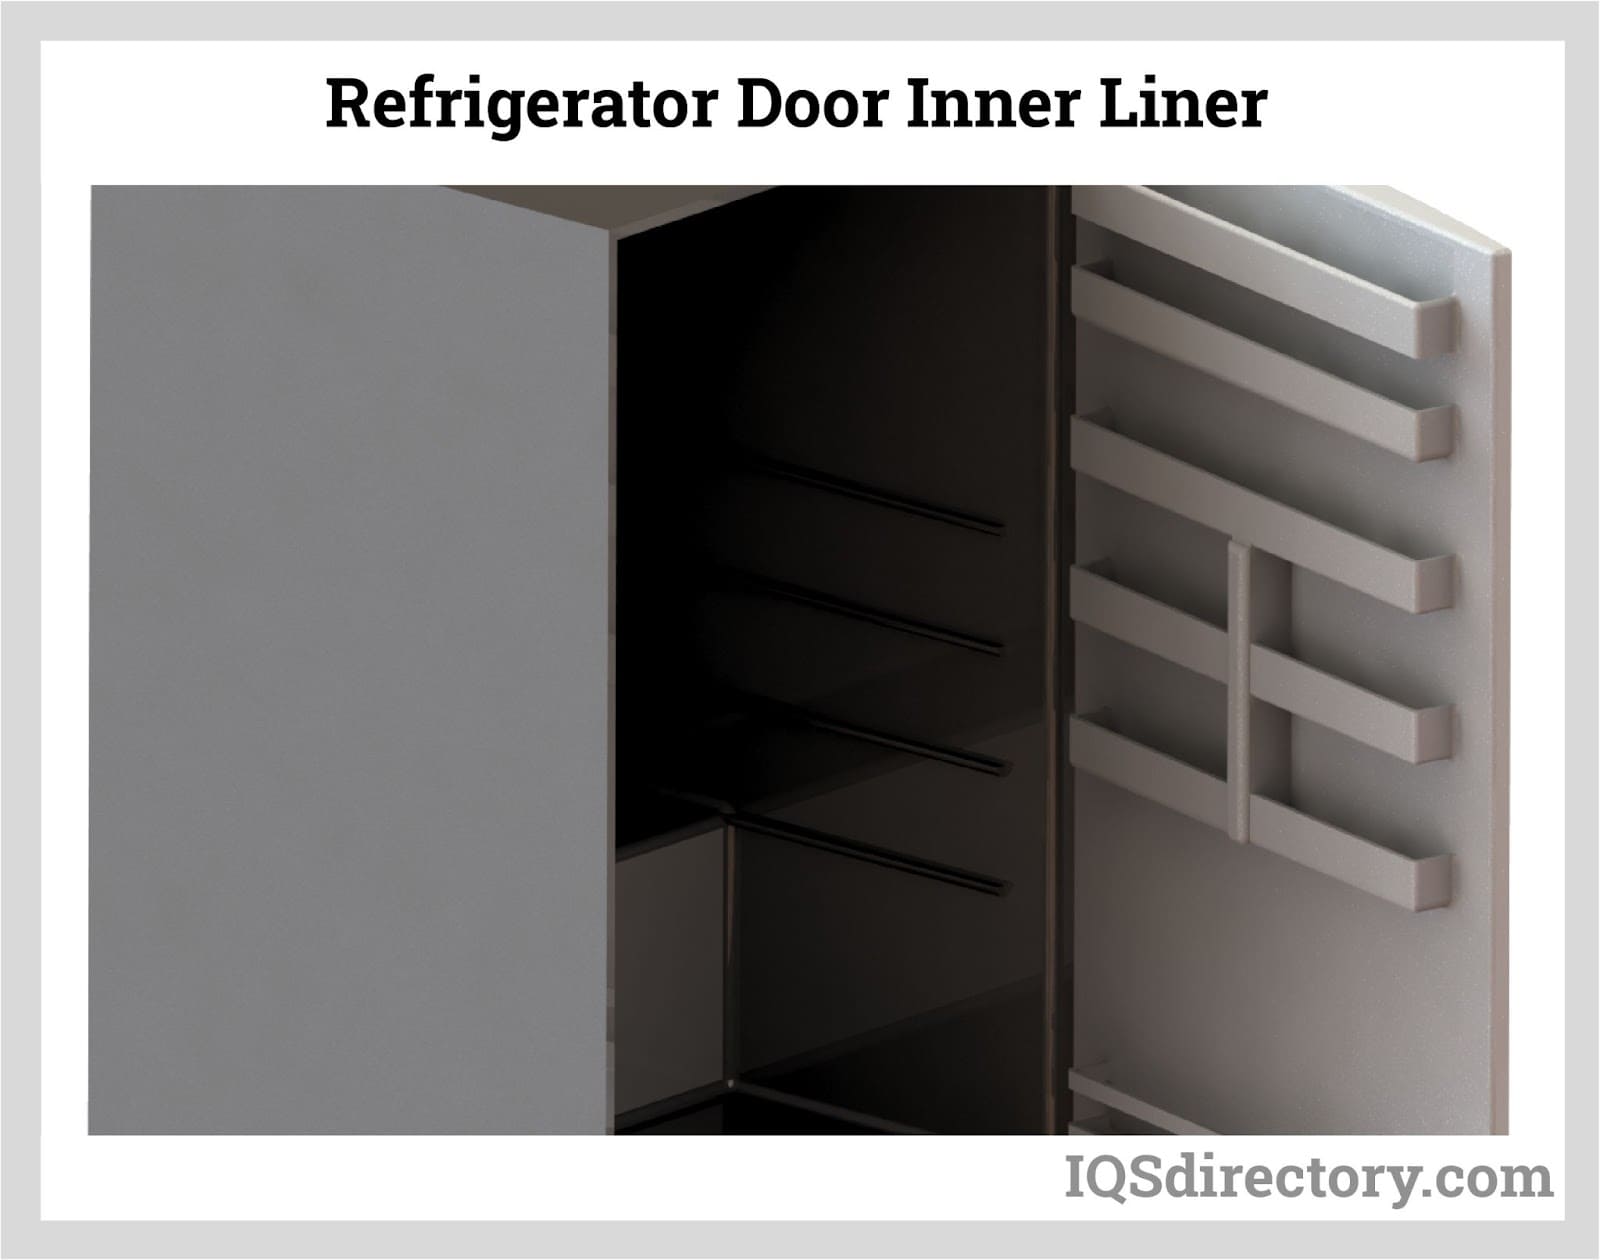 Refrigerator Door Inner Liner